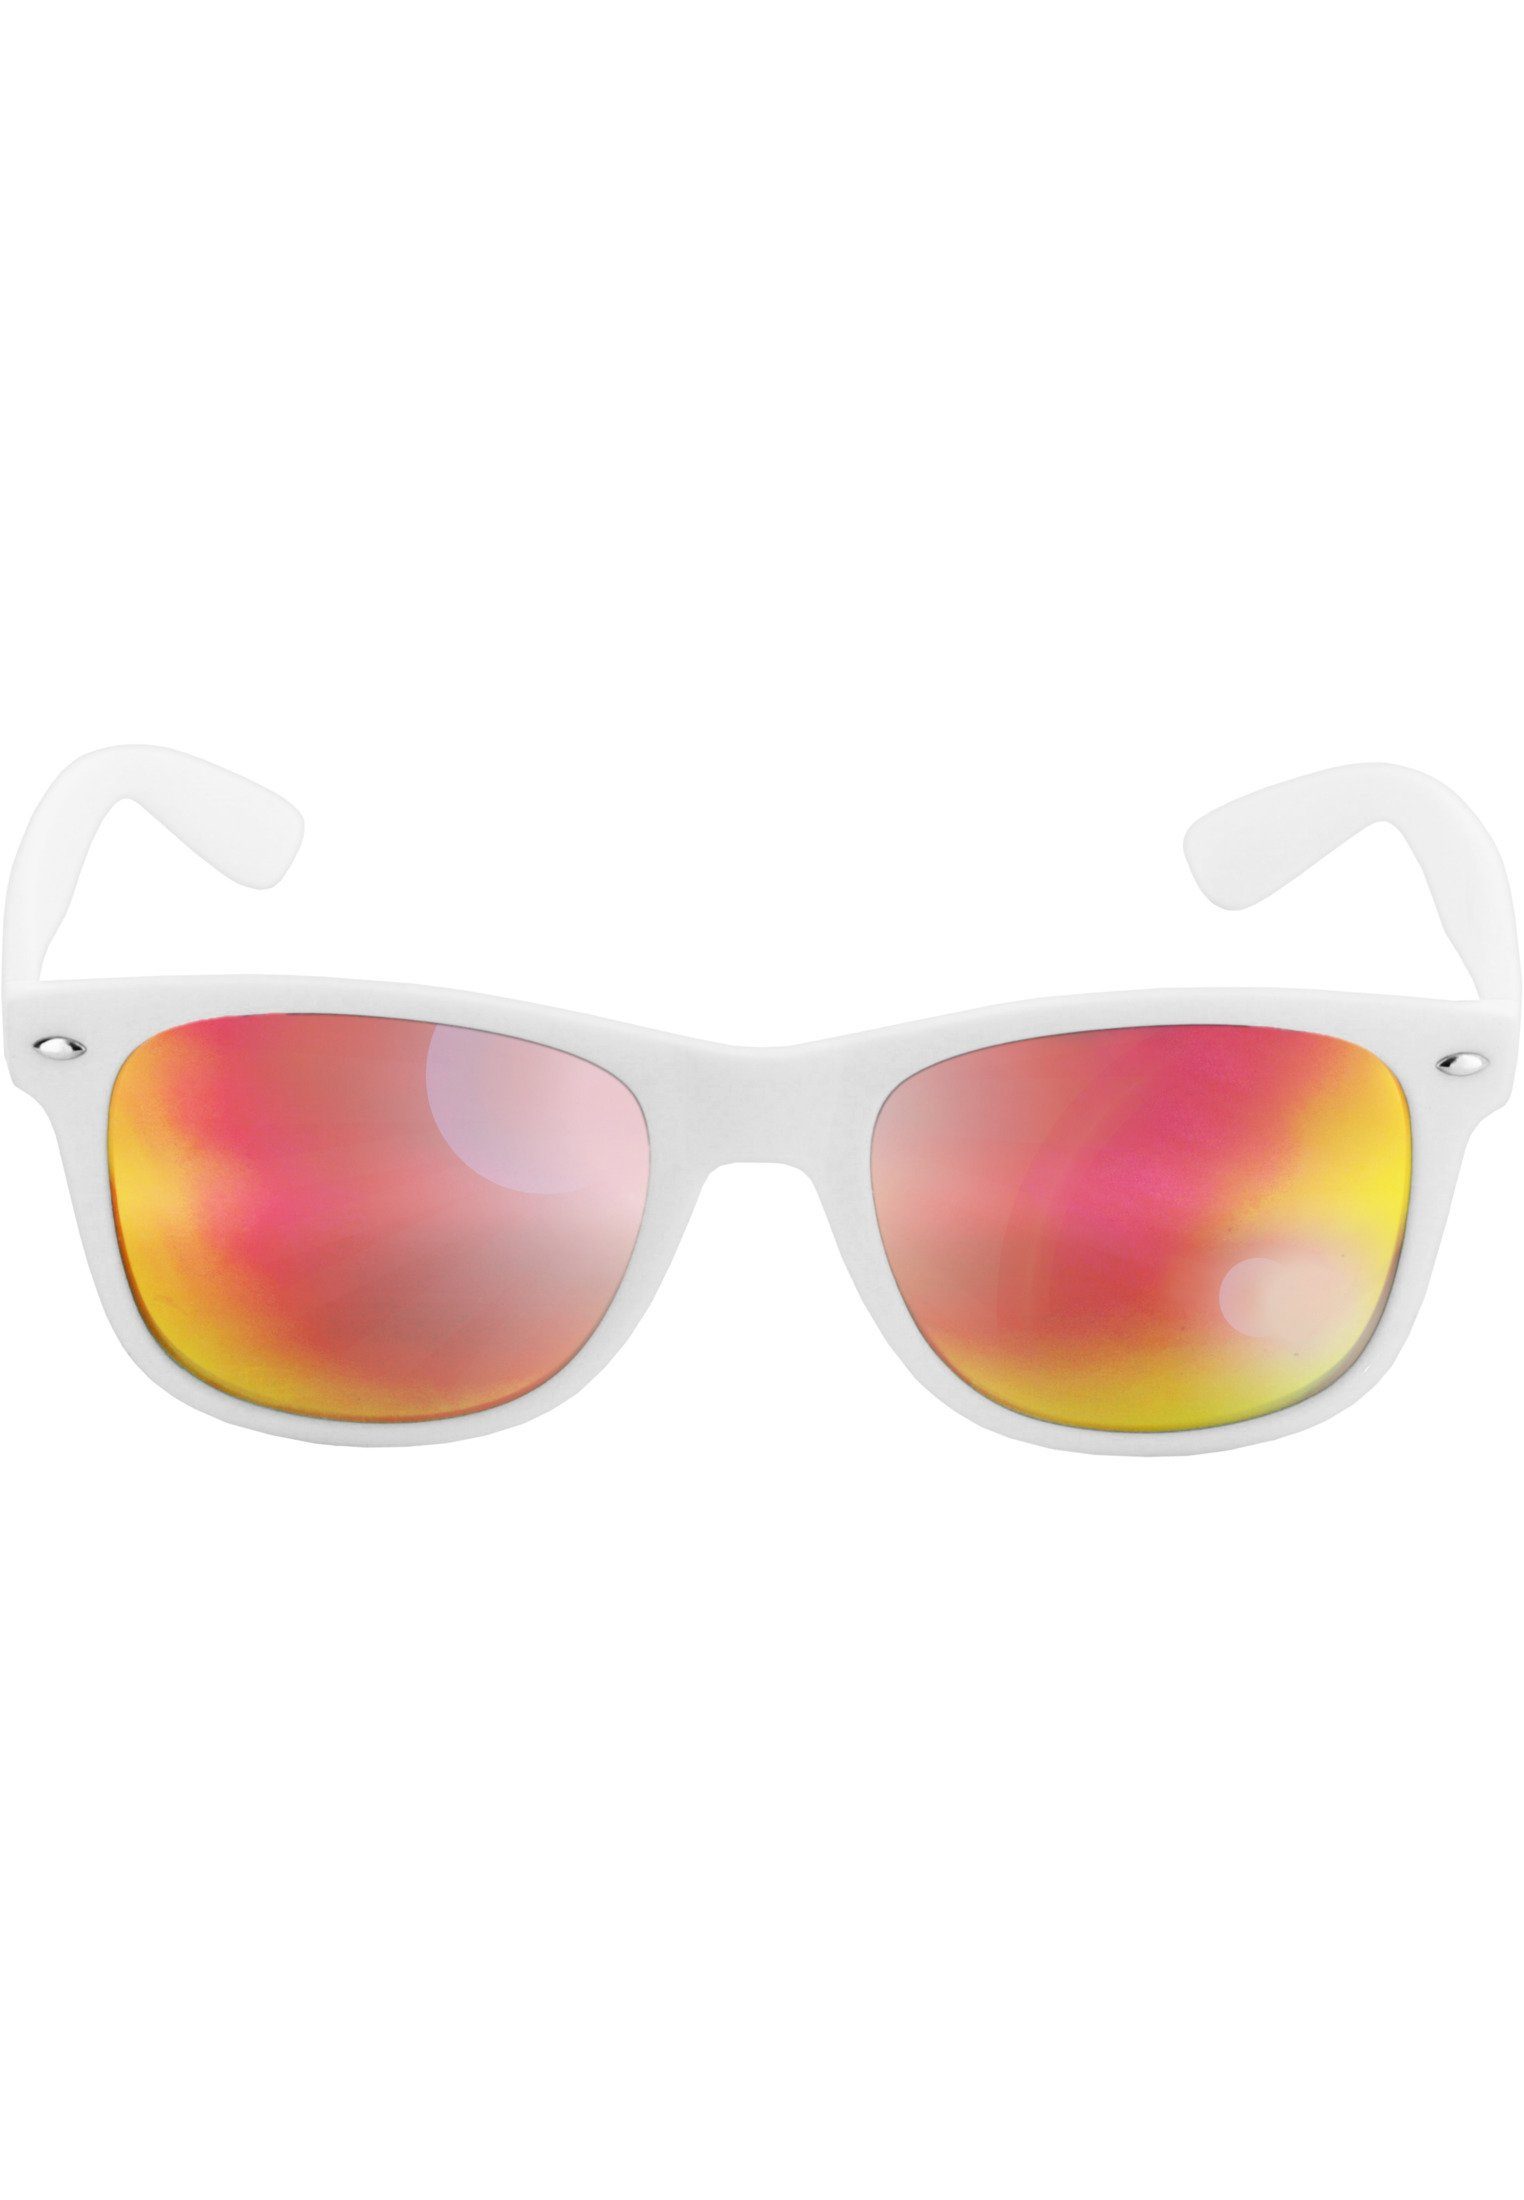 MSTRDS Sonnenbrille Accessoires Sunglasses Likoma wht/red Mirror